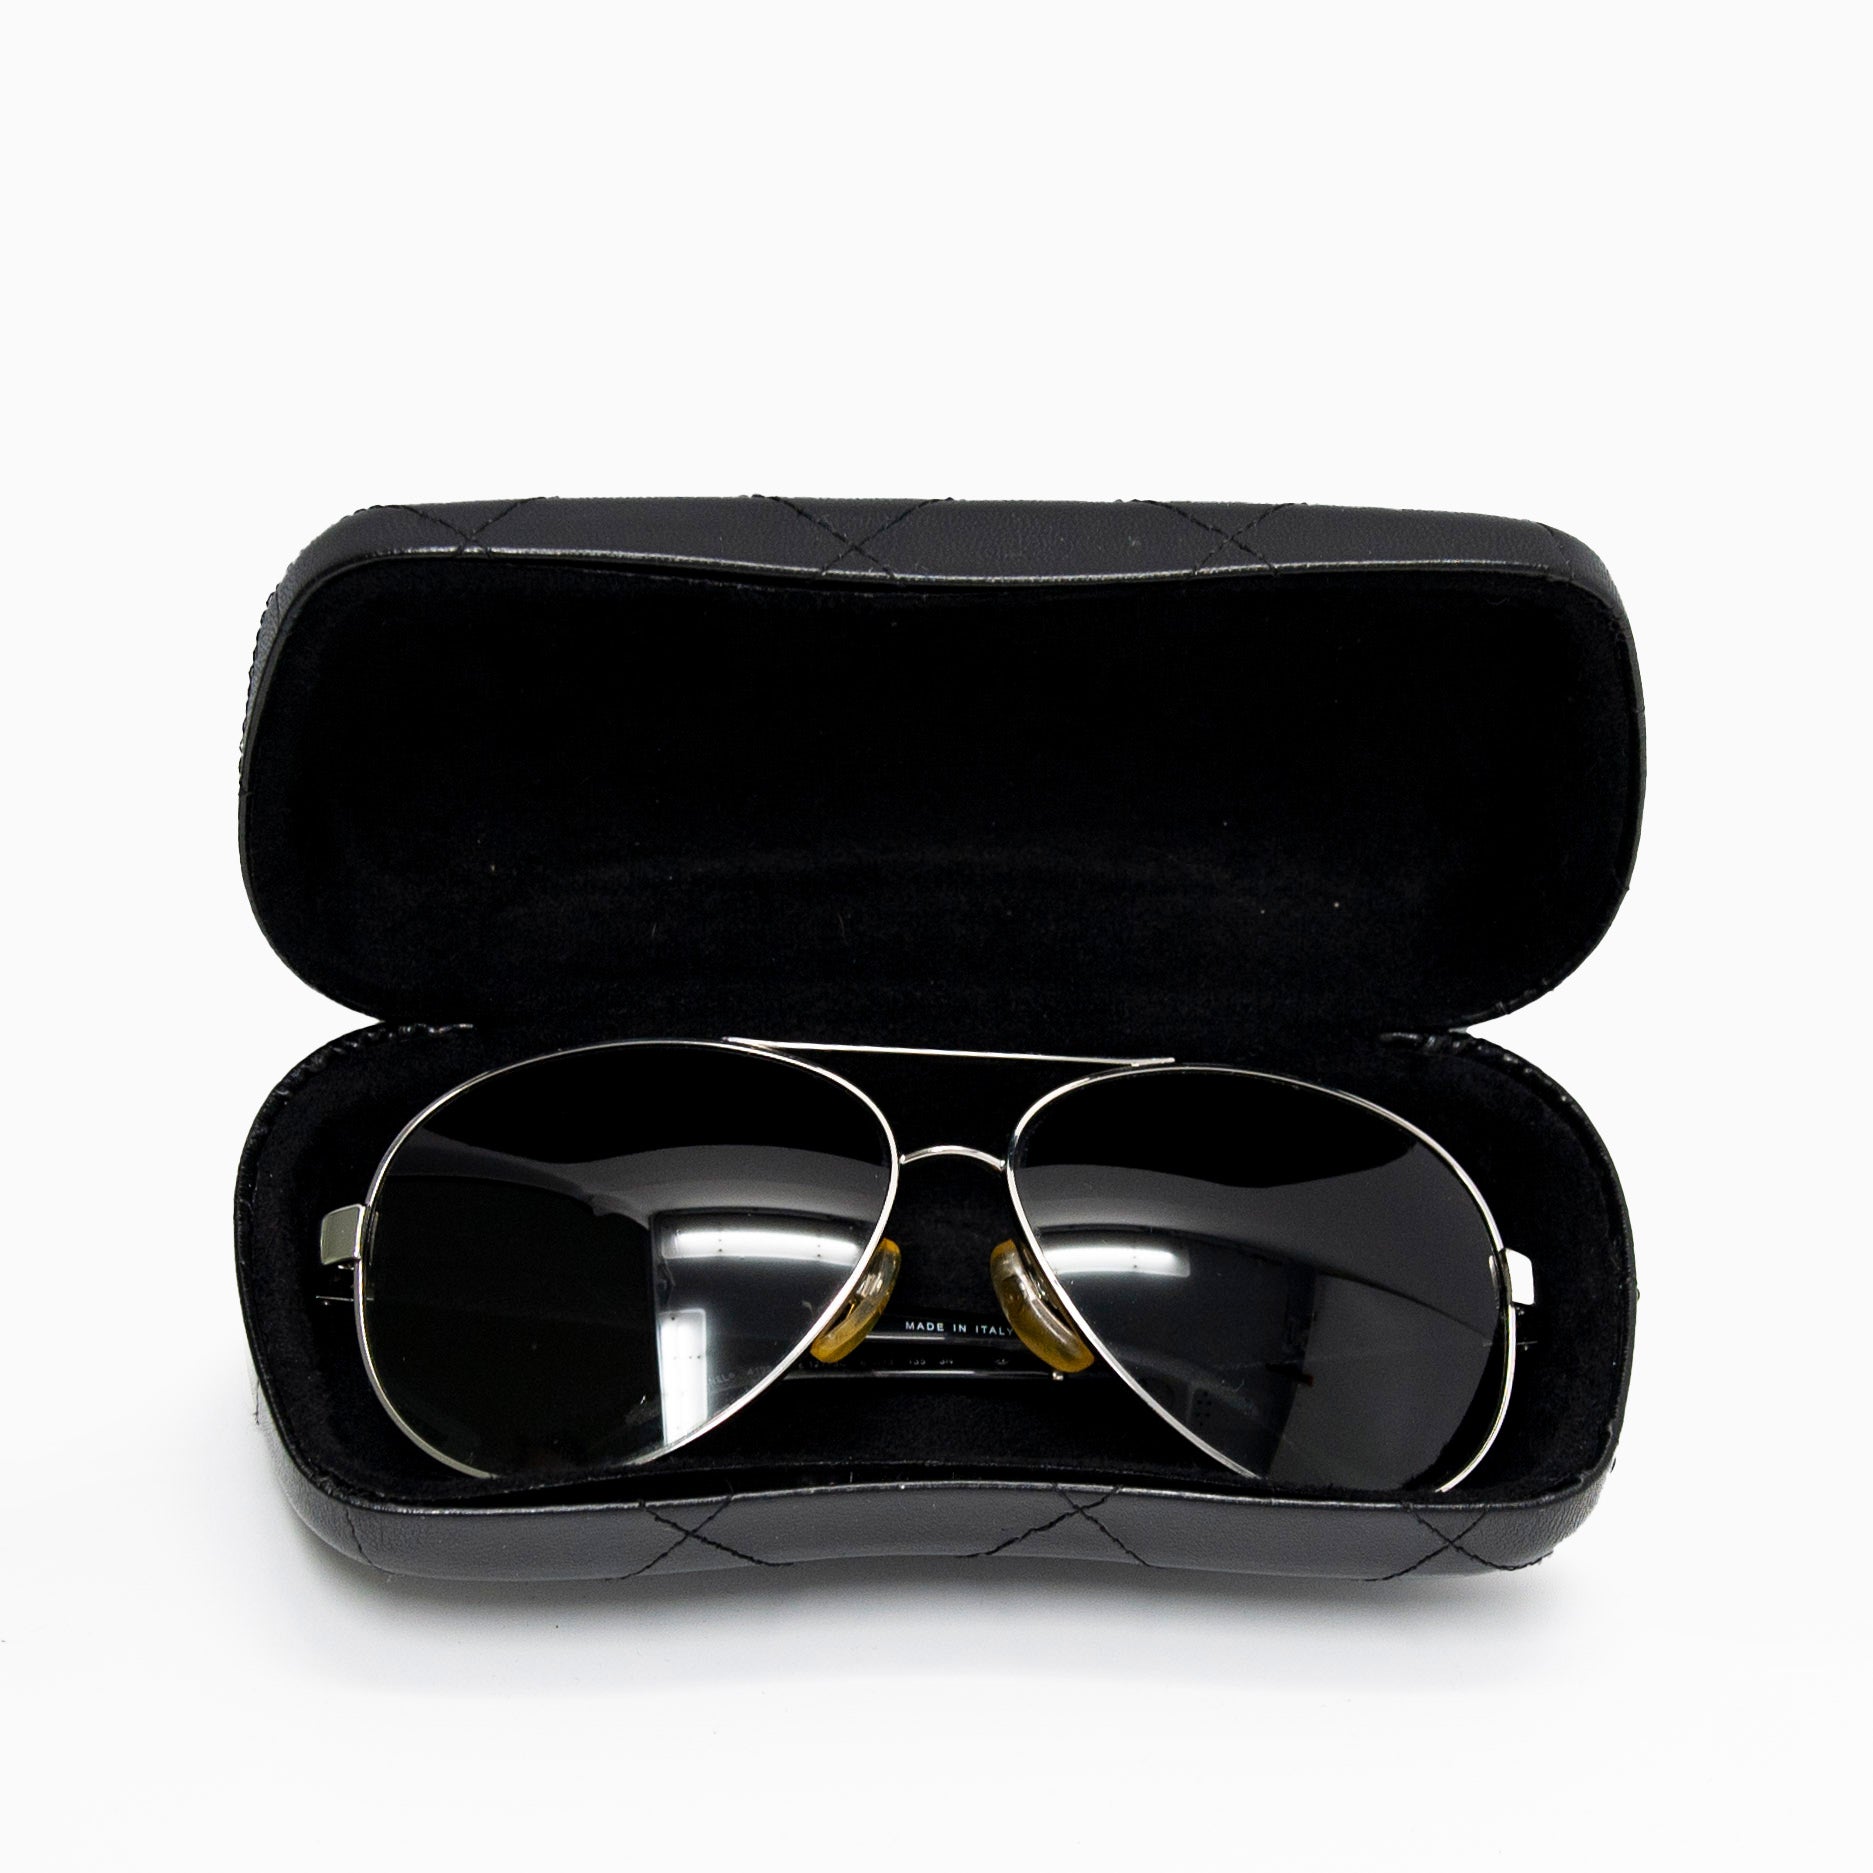 Chanel Black Aviator Sunglasses